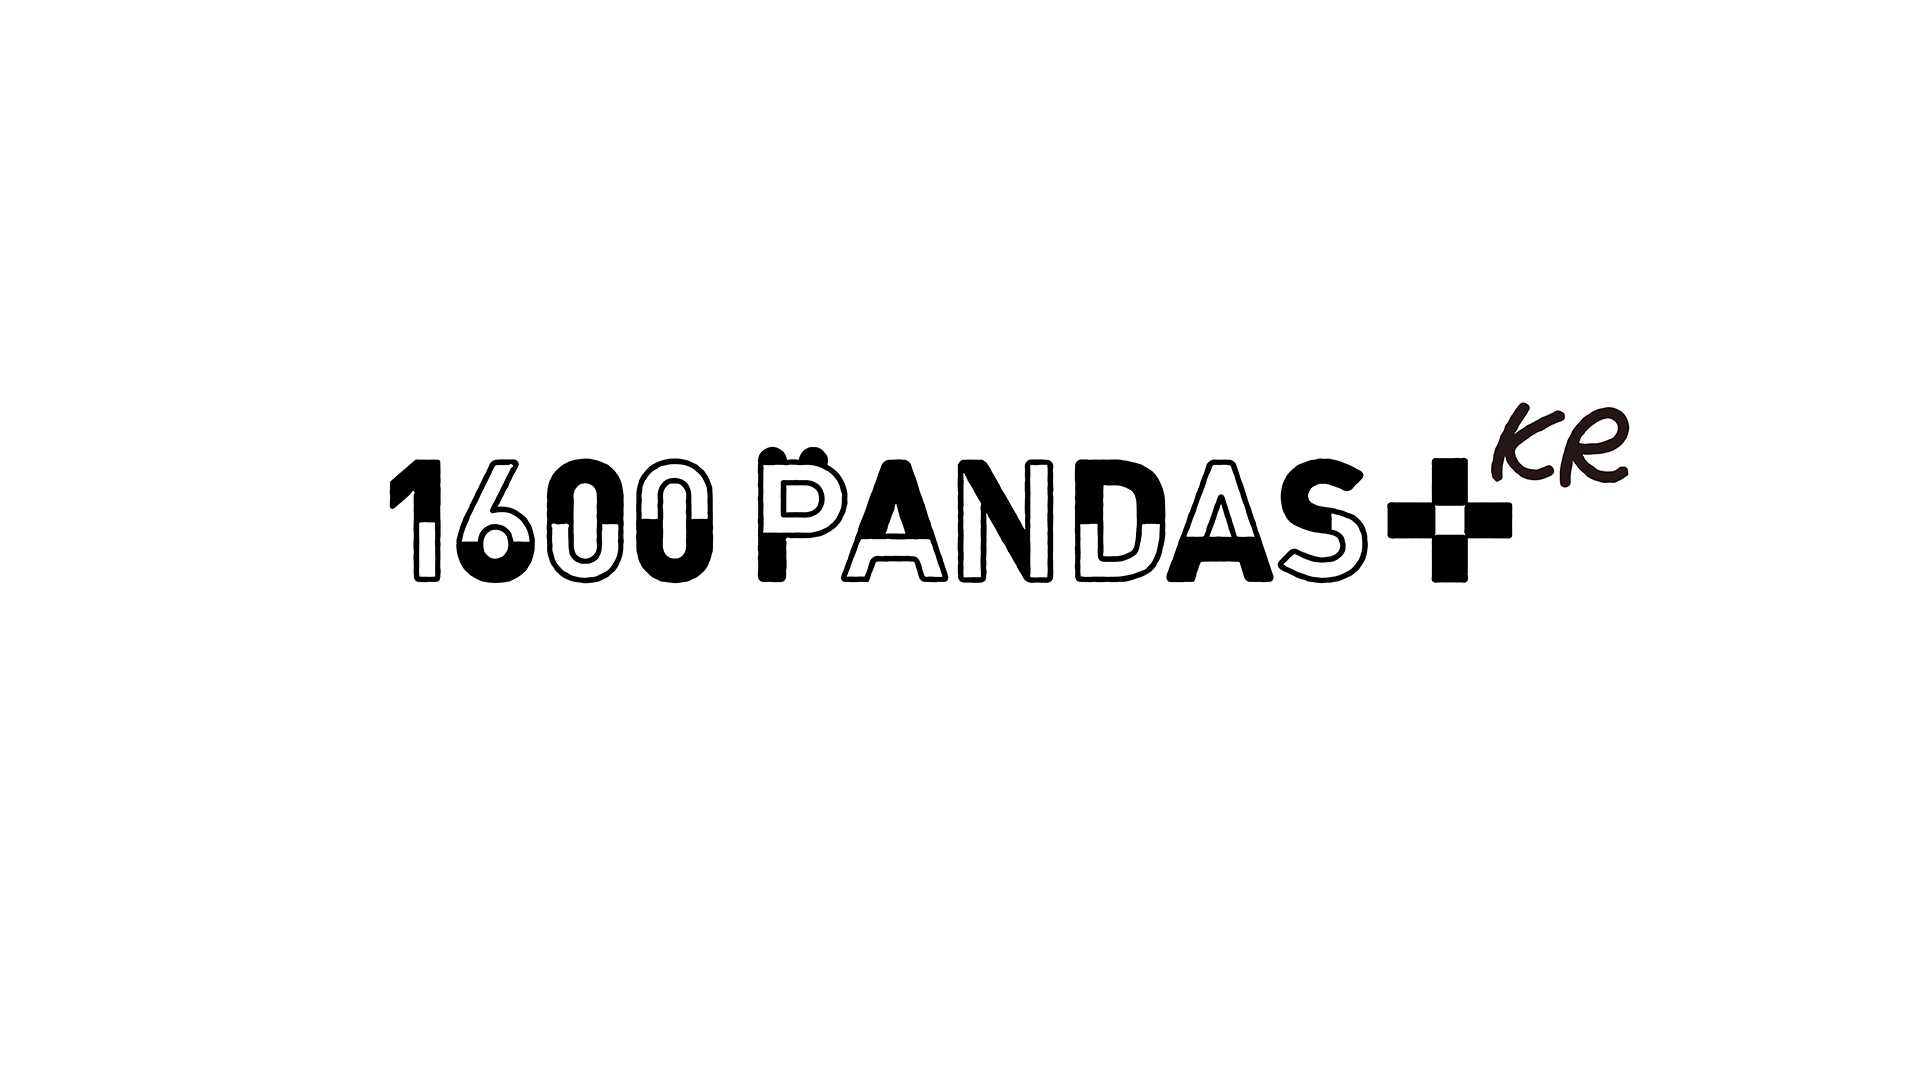 1600 PANDAS+ WORLD TOUR